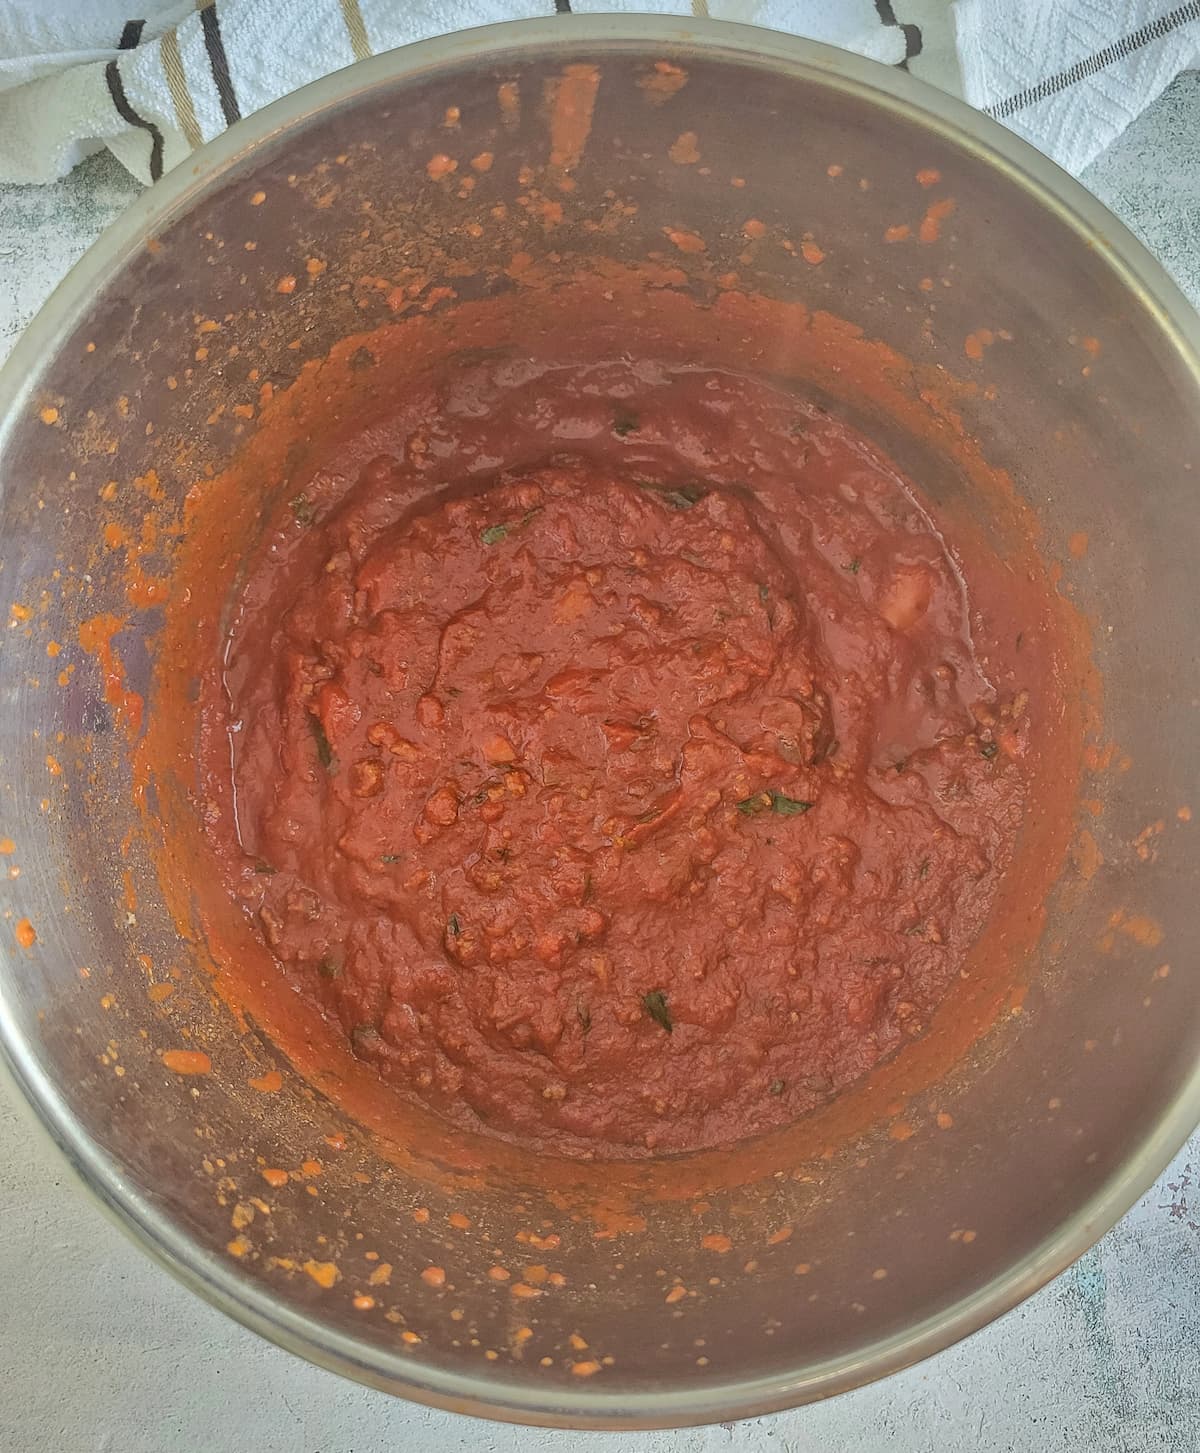 pot of tomato sauce